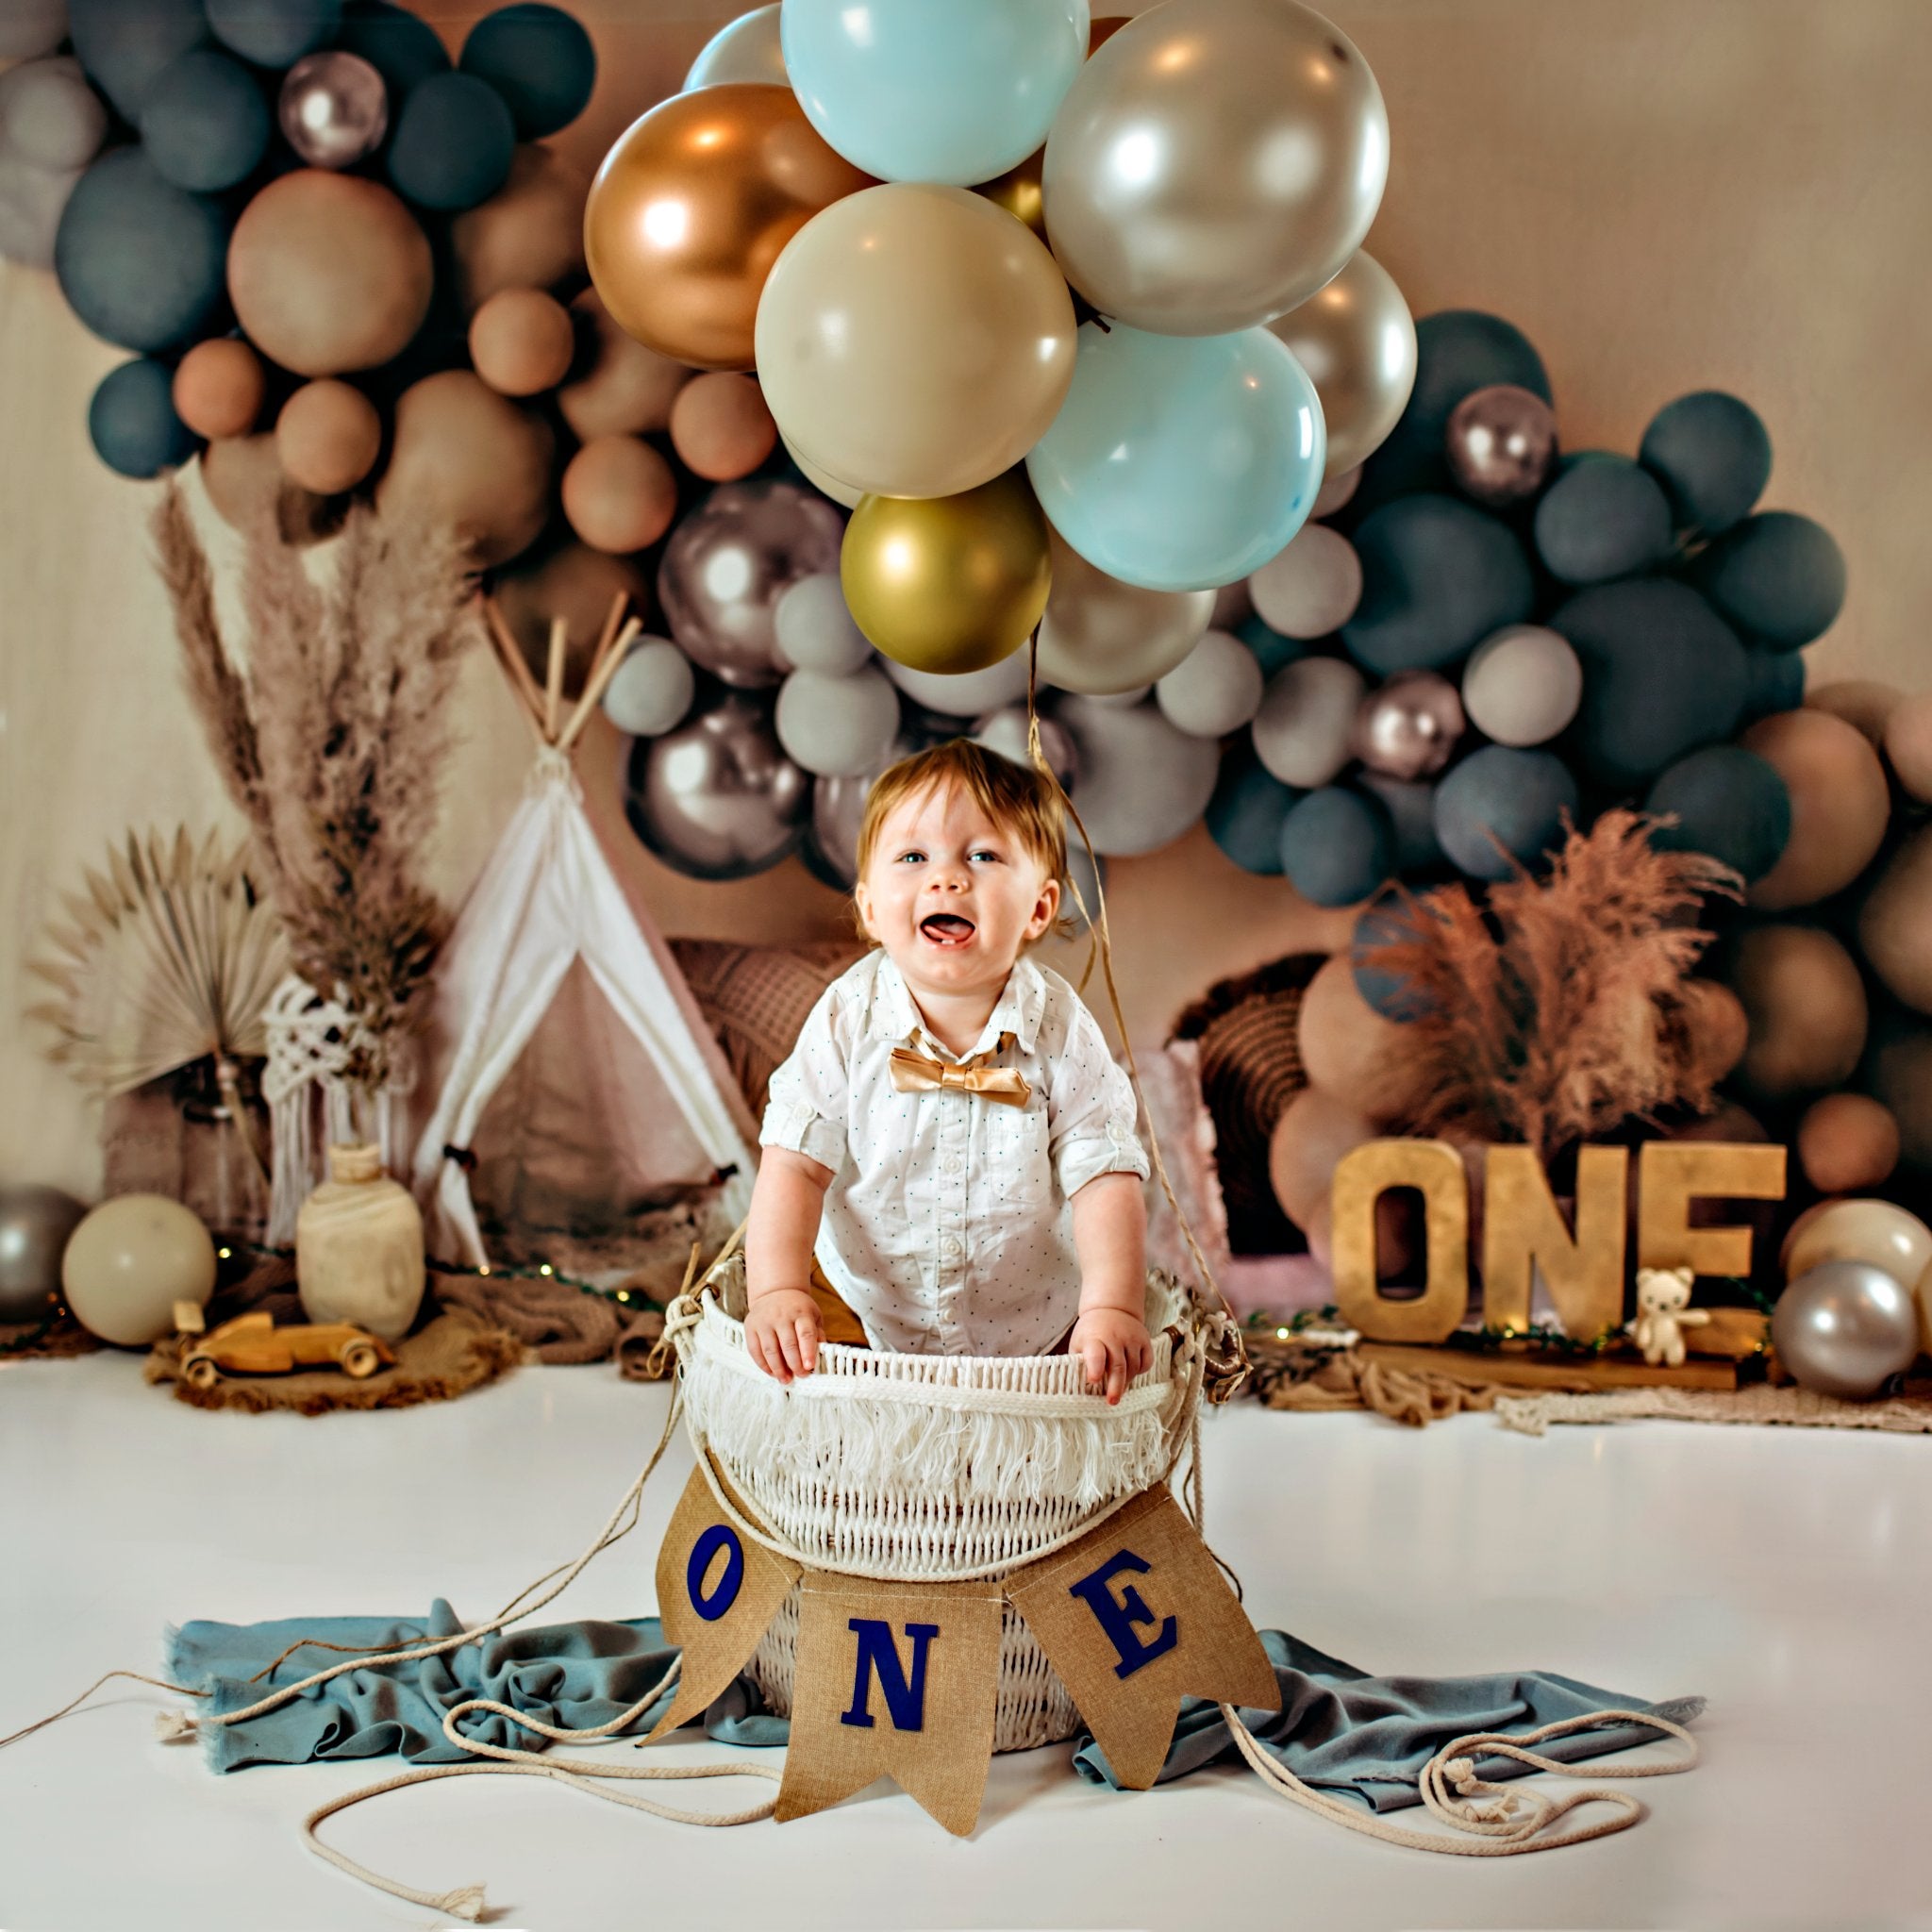 Kate Boho Ballons Zelt Hintergrund blau von Mandy Ringe Photography